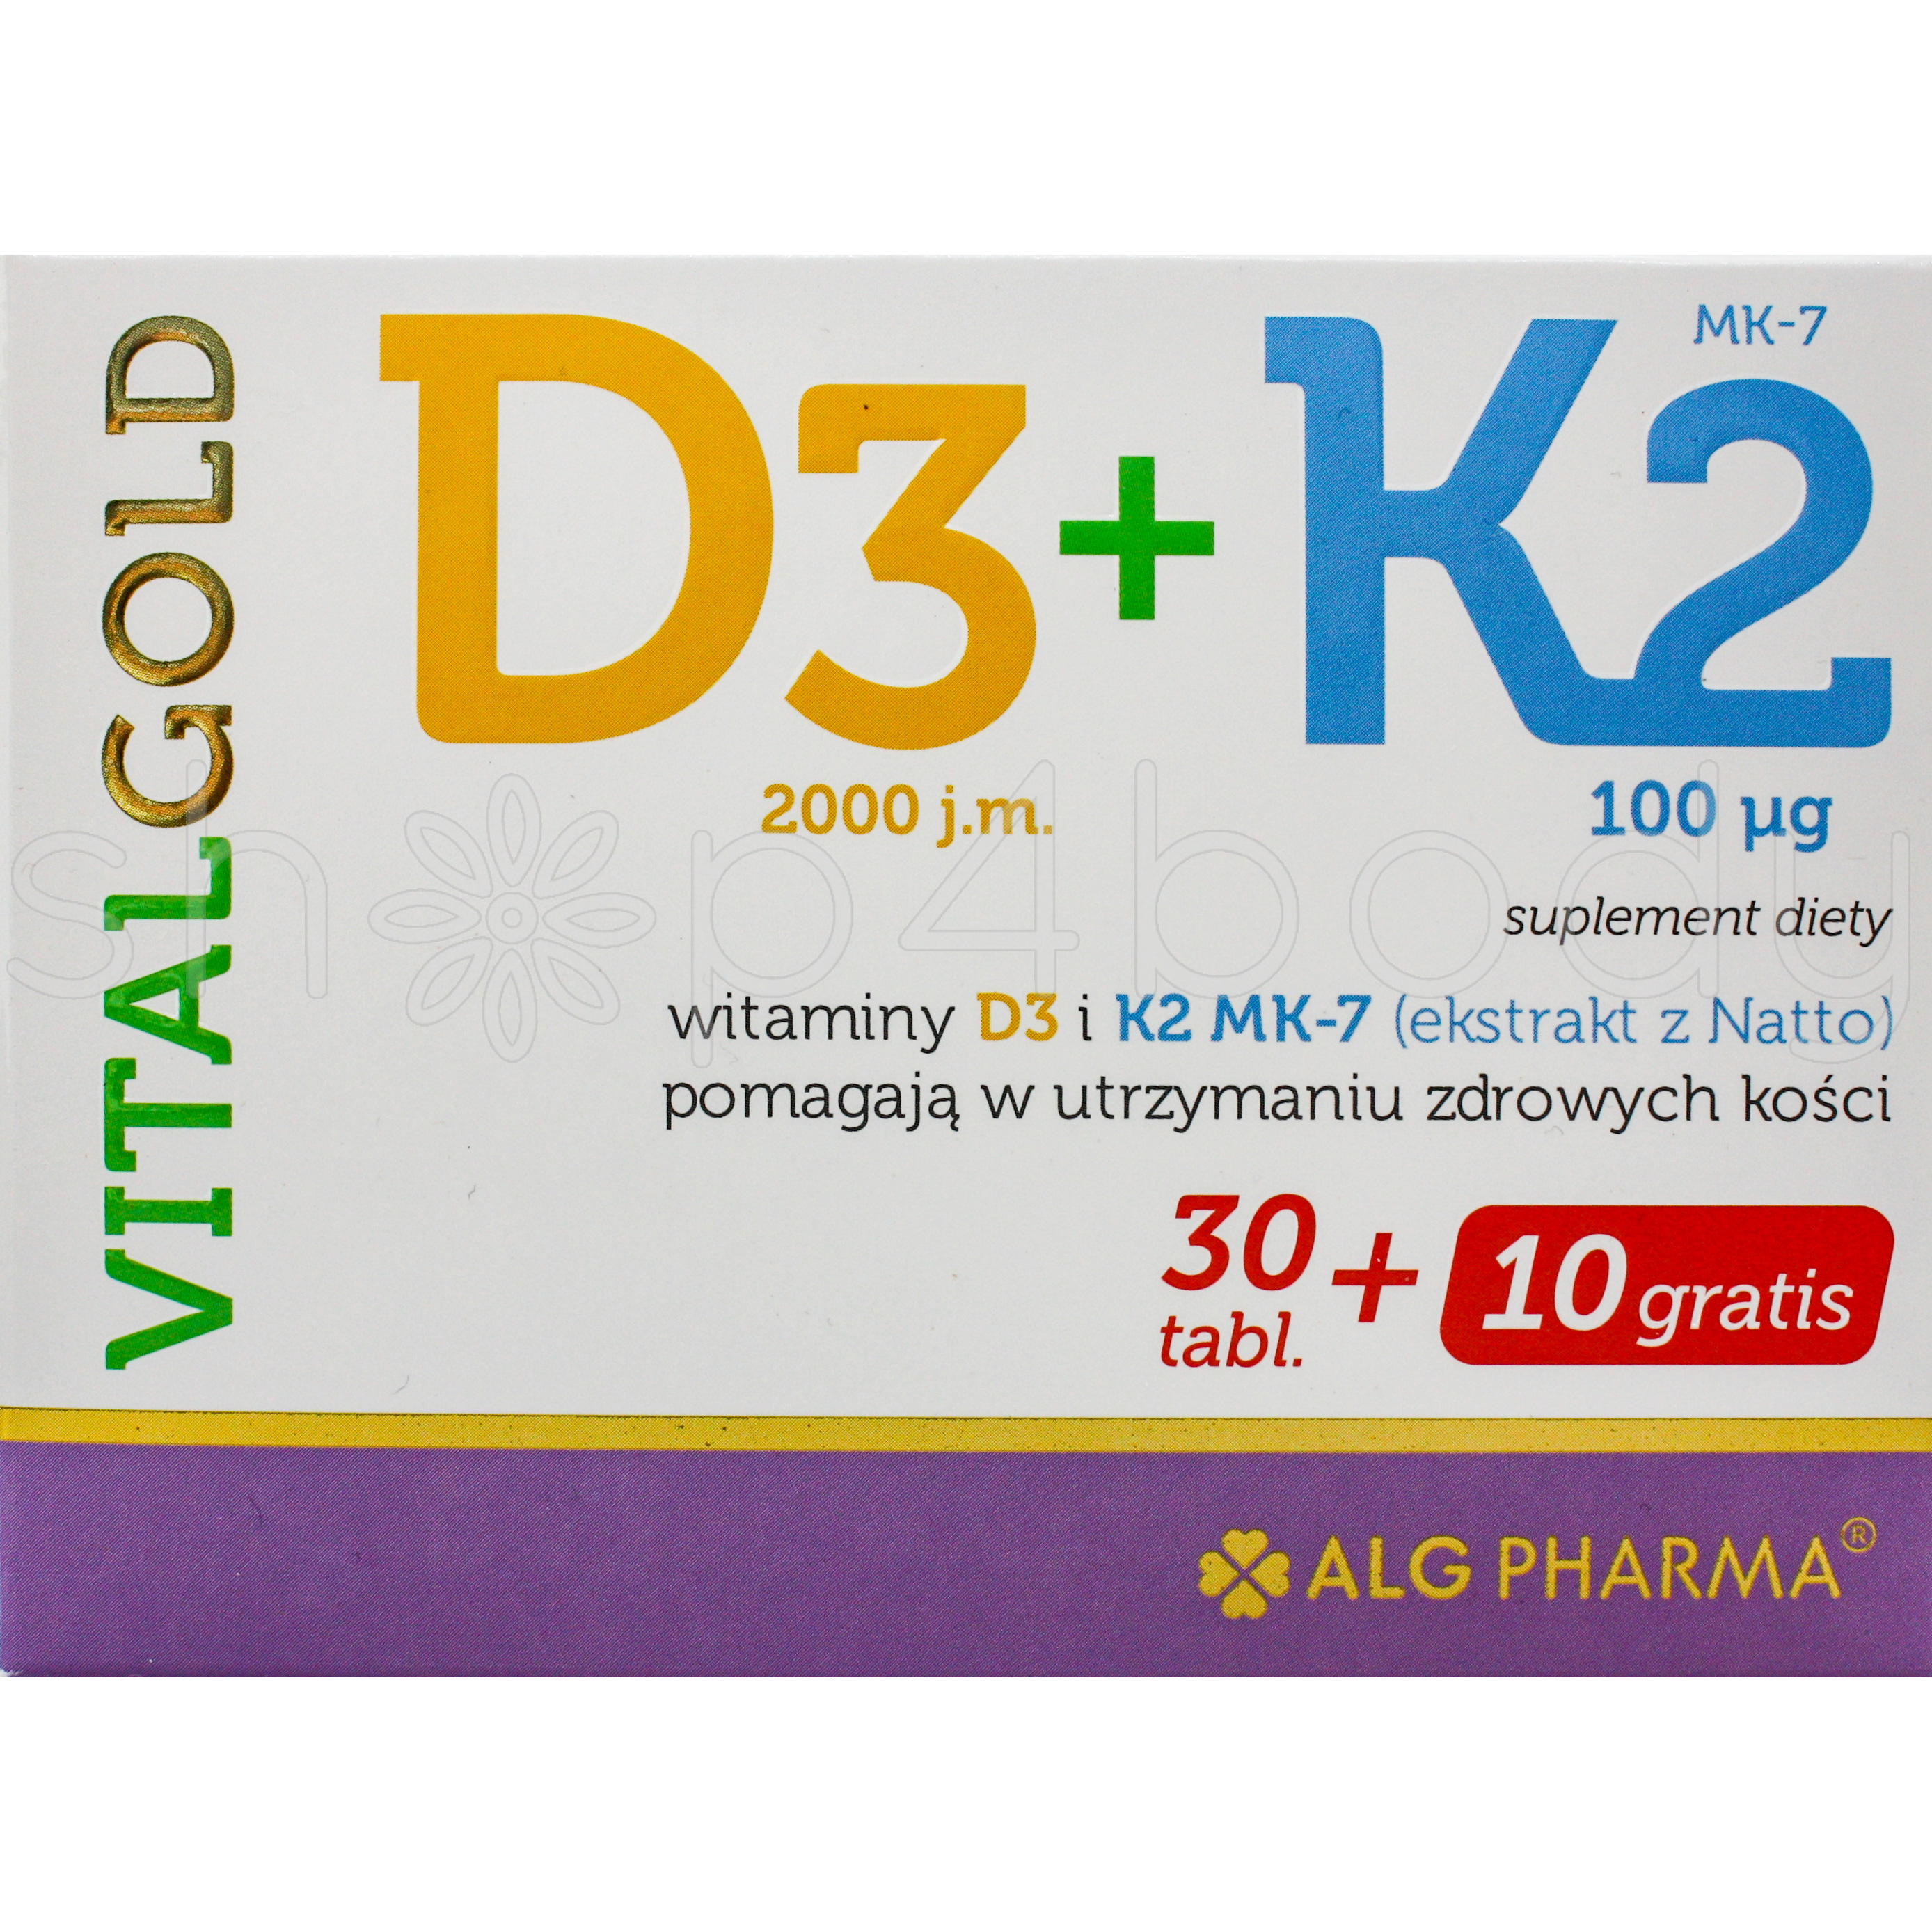 vital-gold-vitamin-d3-og-vitamin-k2.jpg